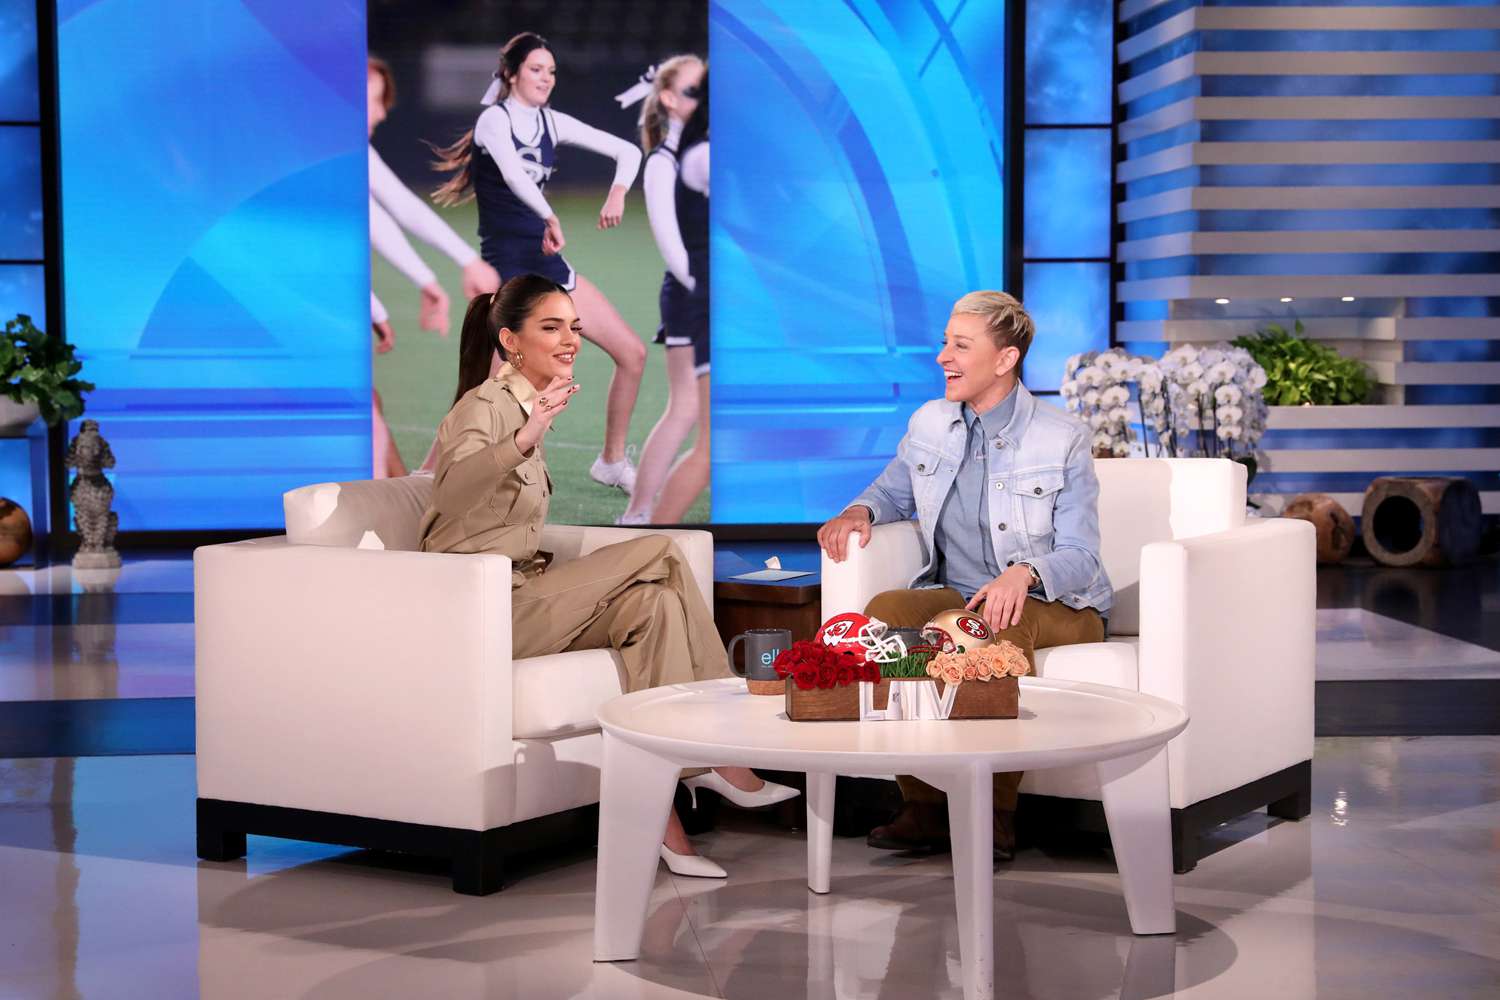 Kendall Jenner makes an appearance on &ldquo;The Ellen DeGeneres Show&rdquo;